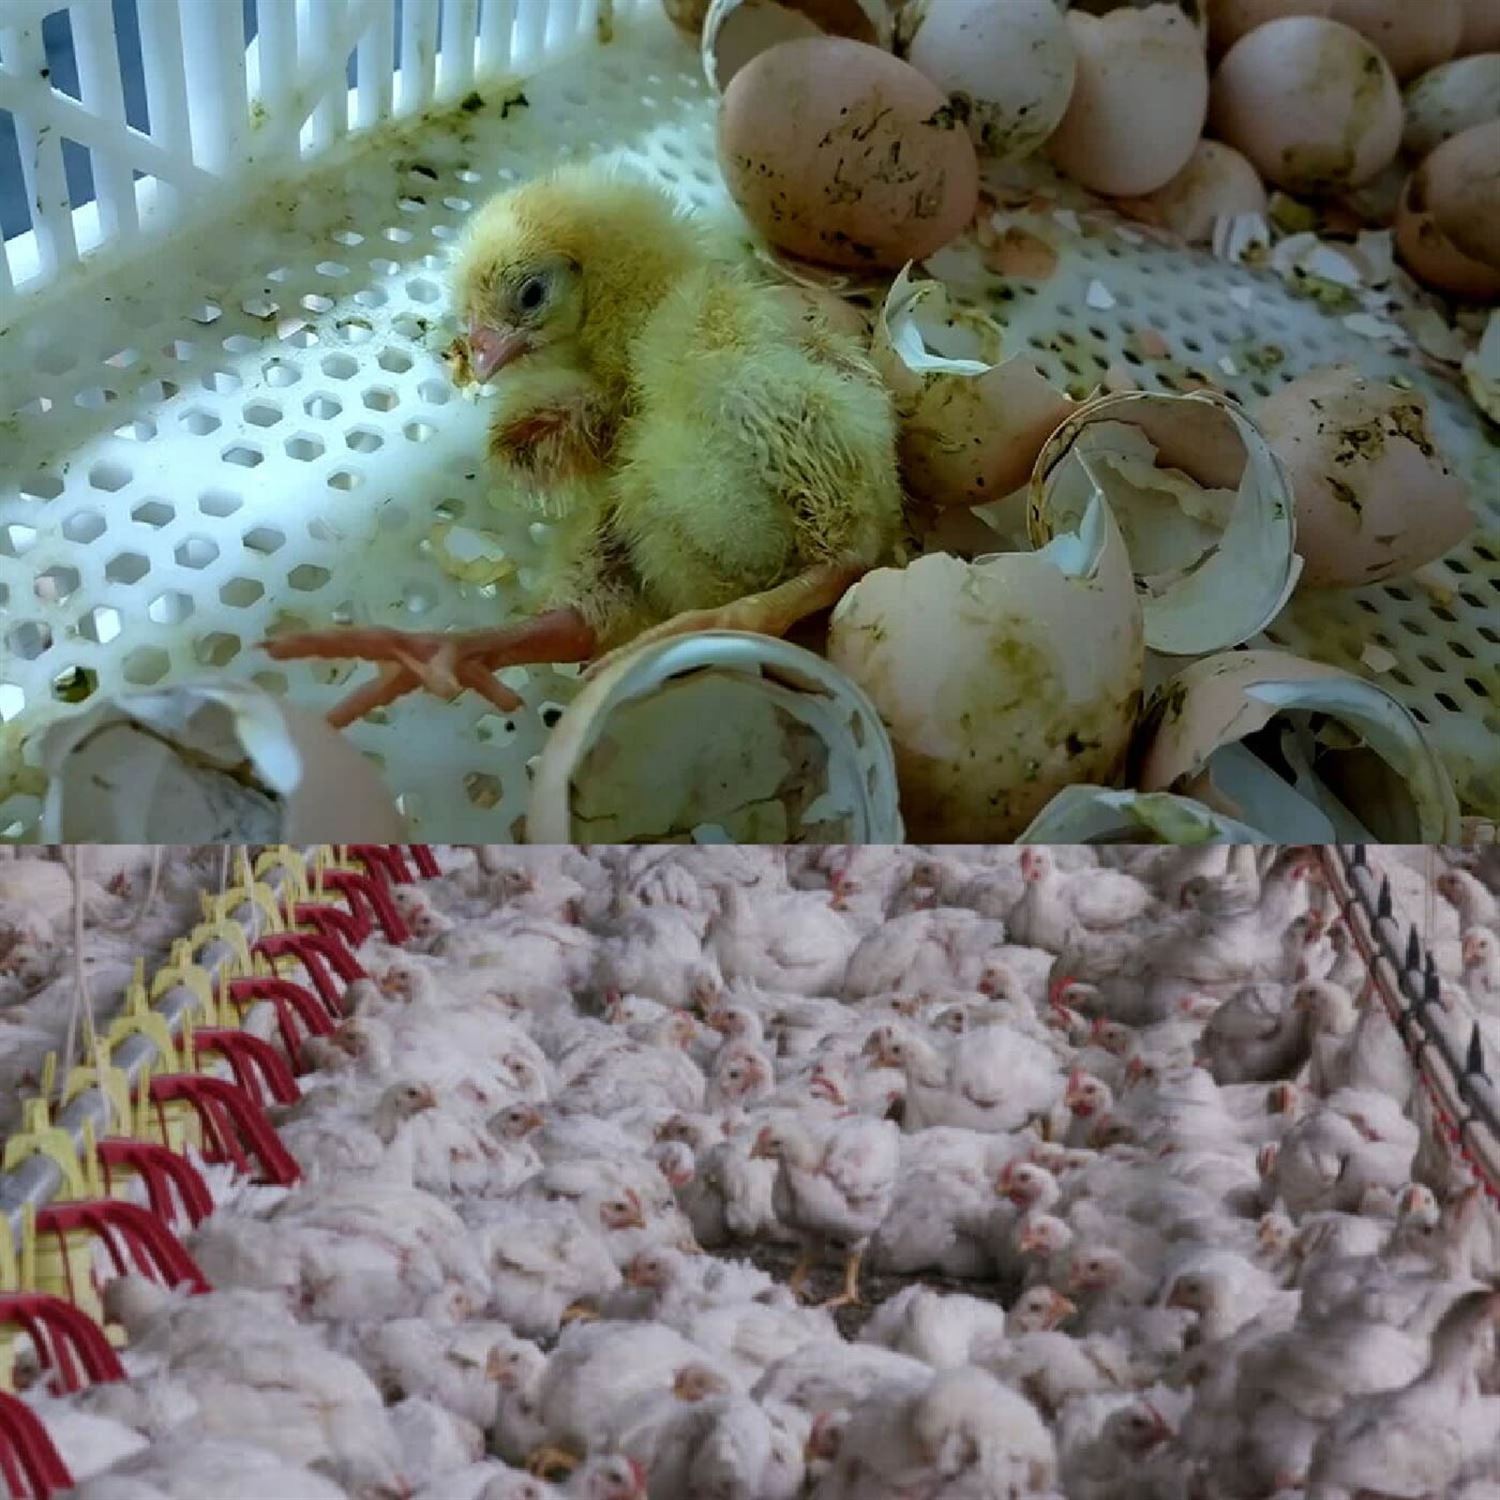 A chicken analogy